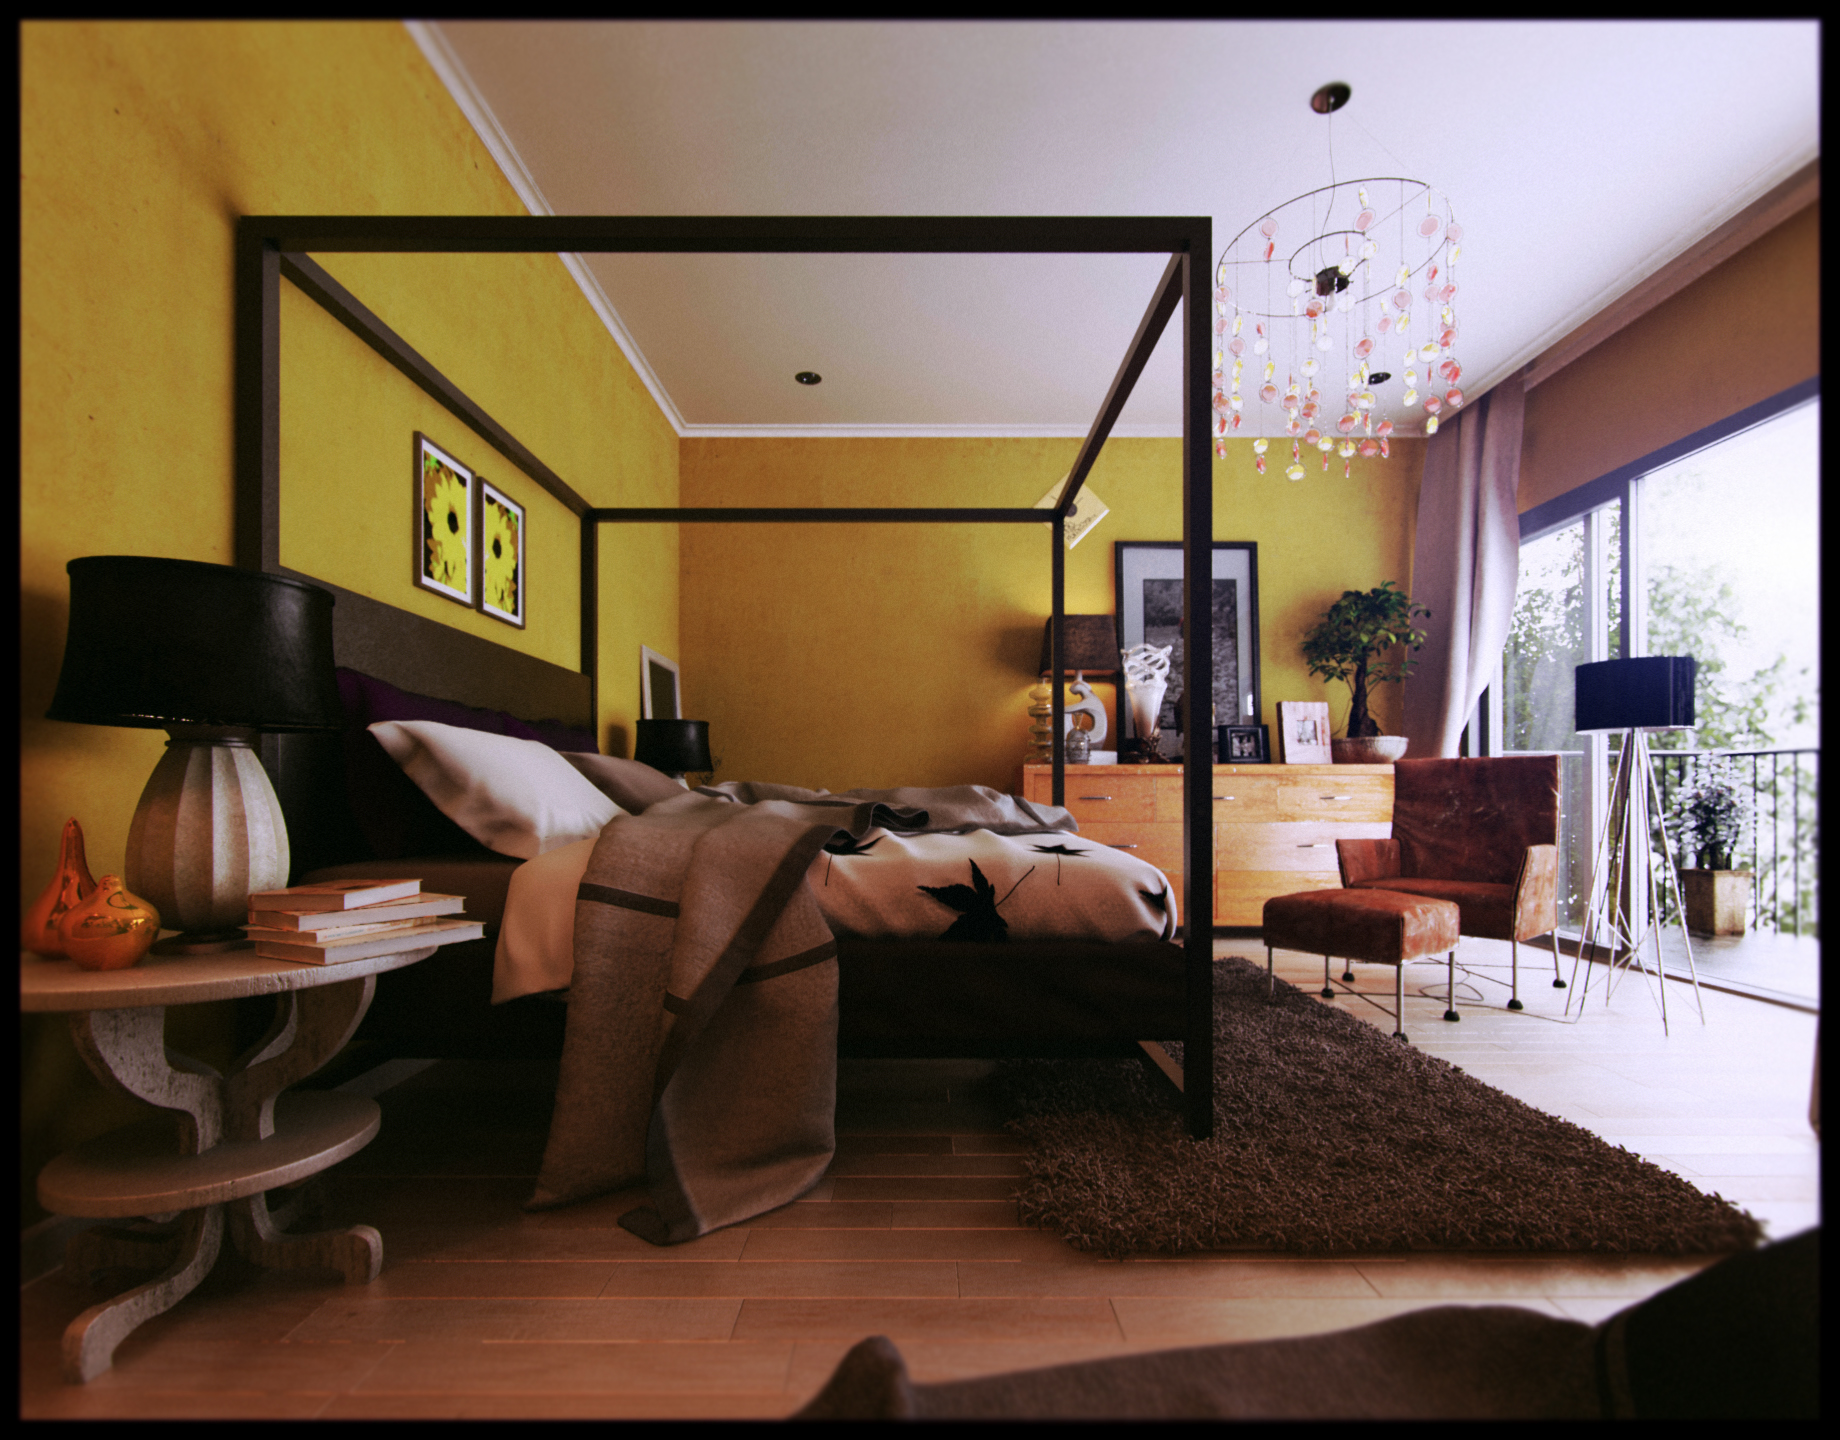 the yellow bedroom